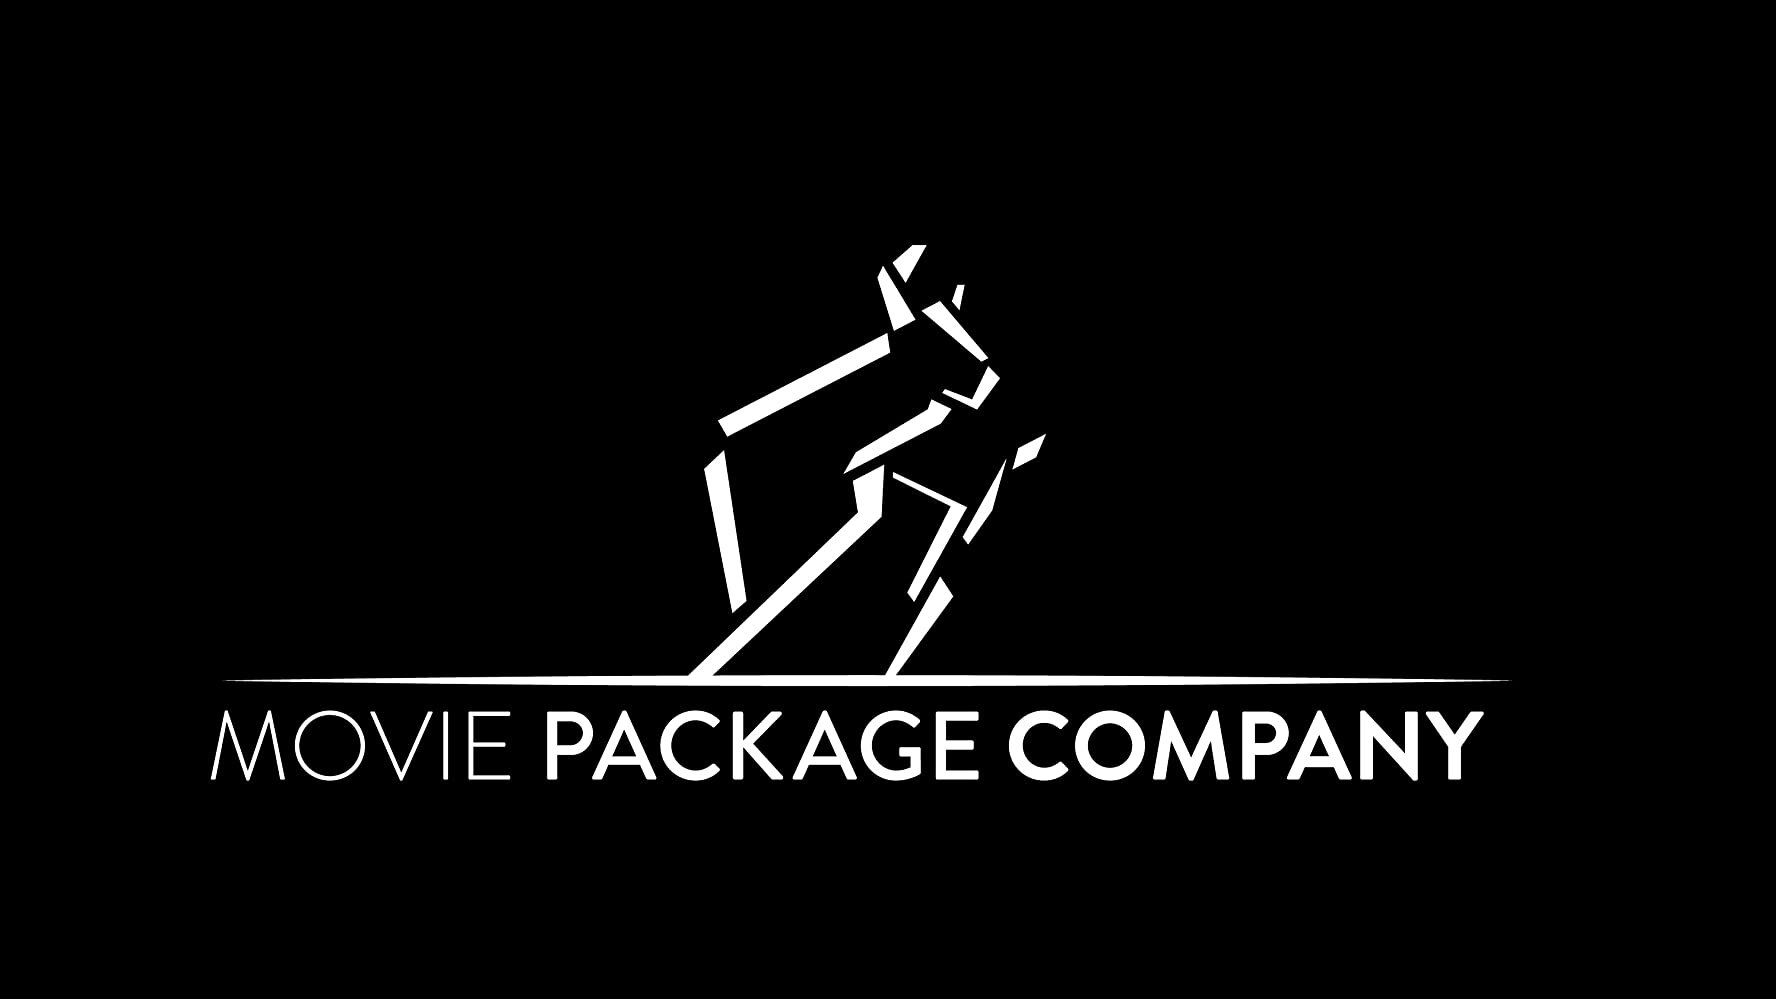 Movie Package Company logo.jpg